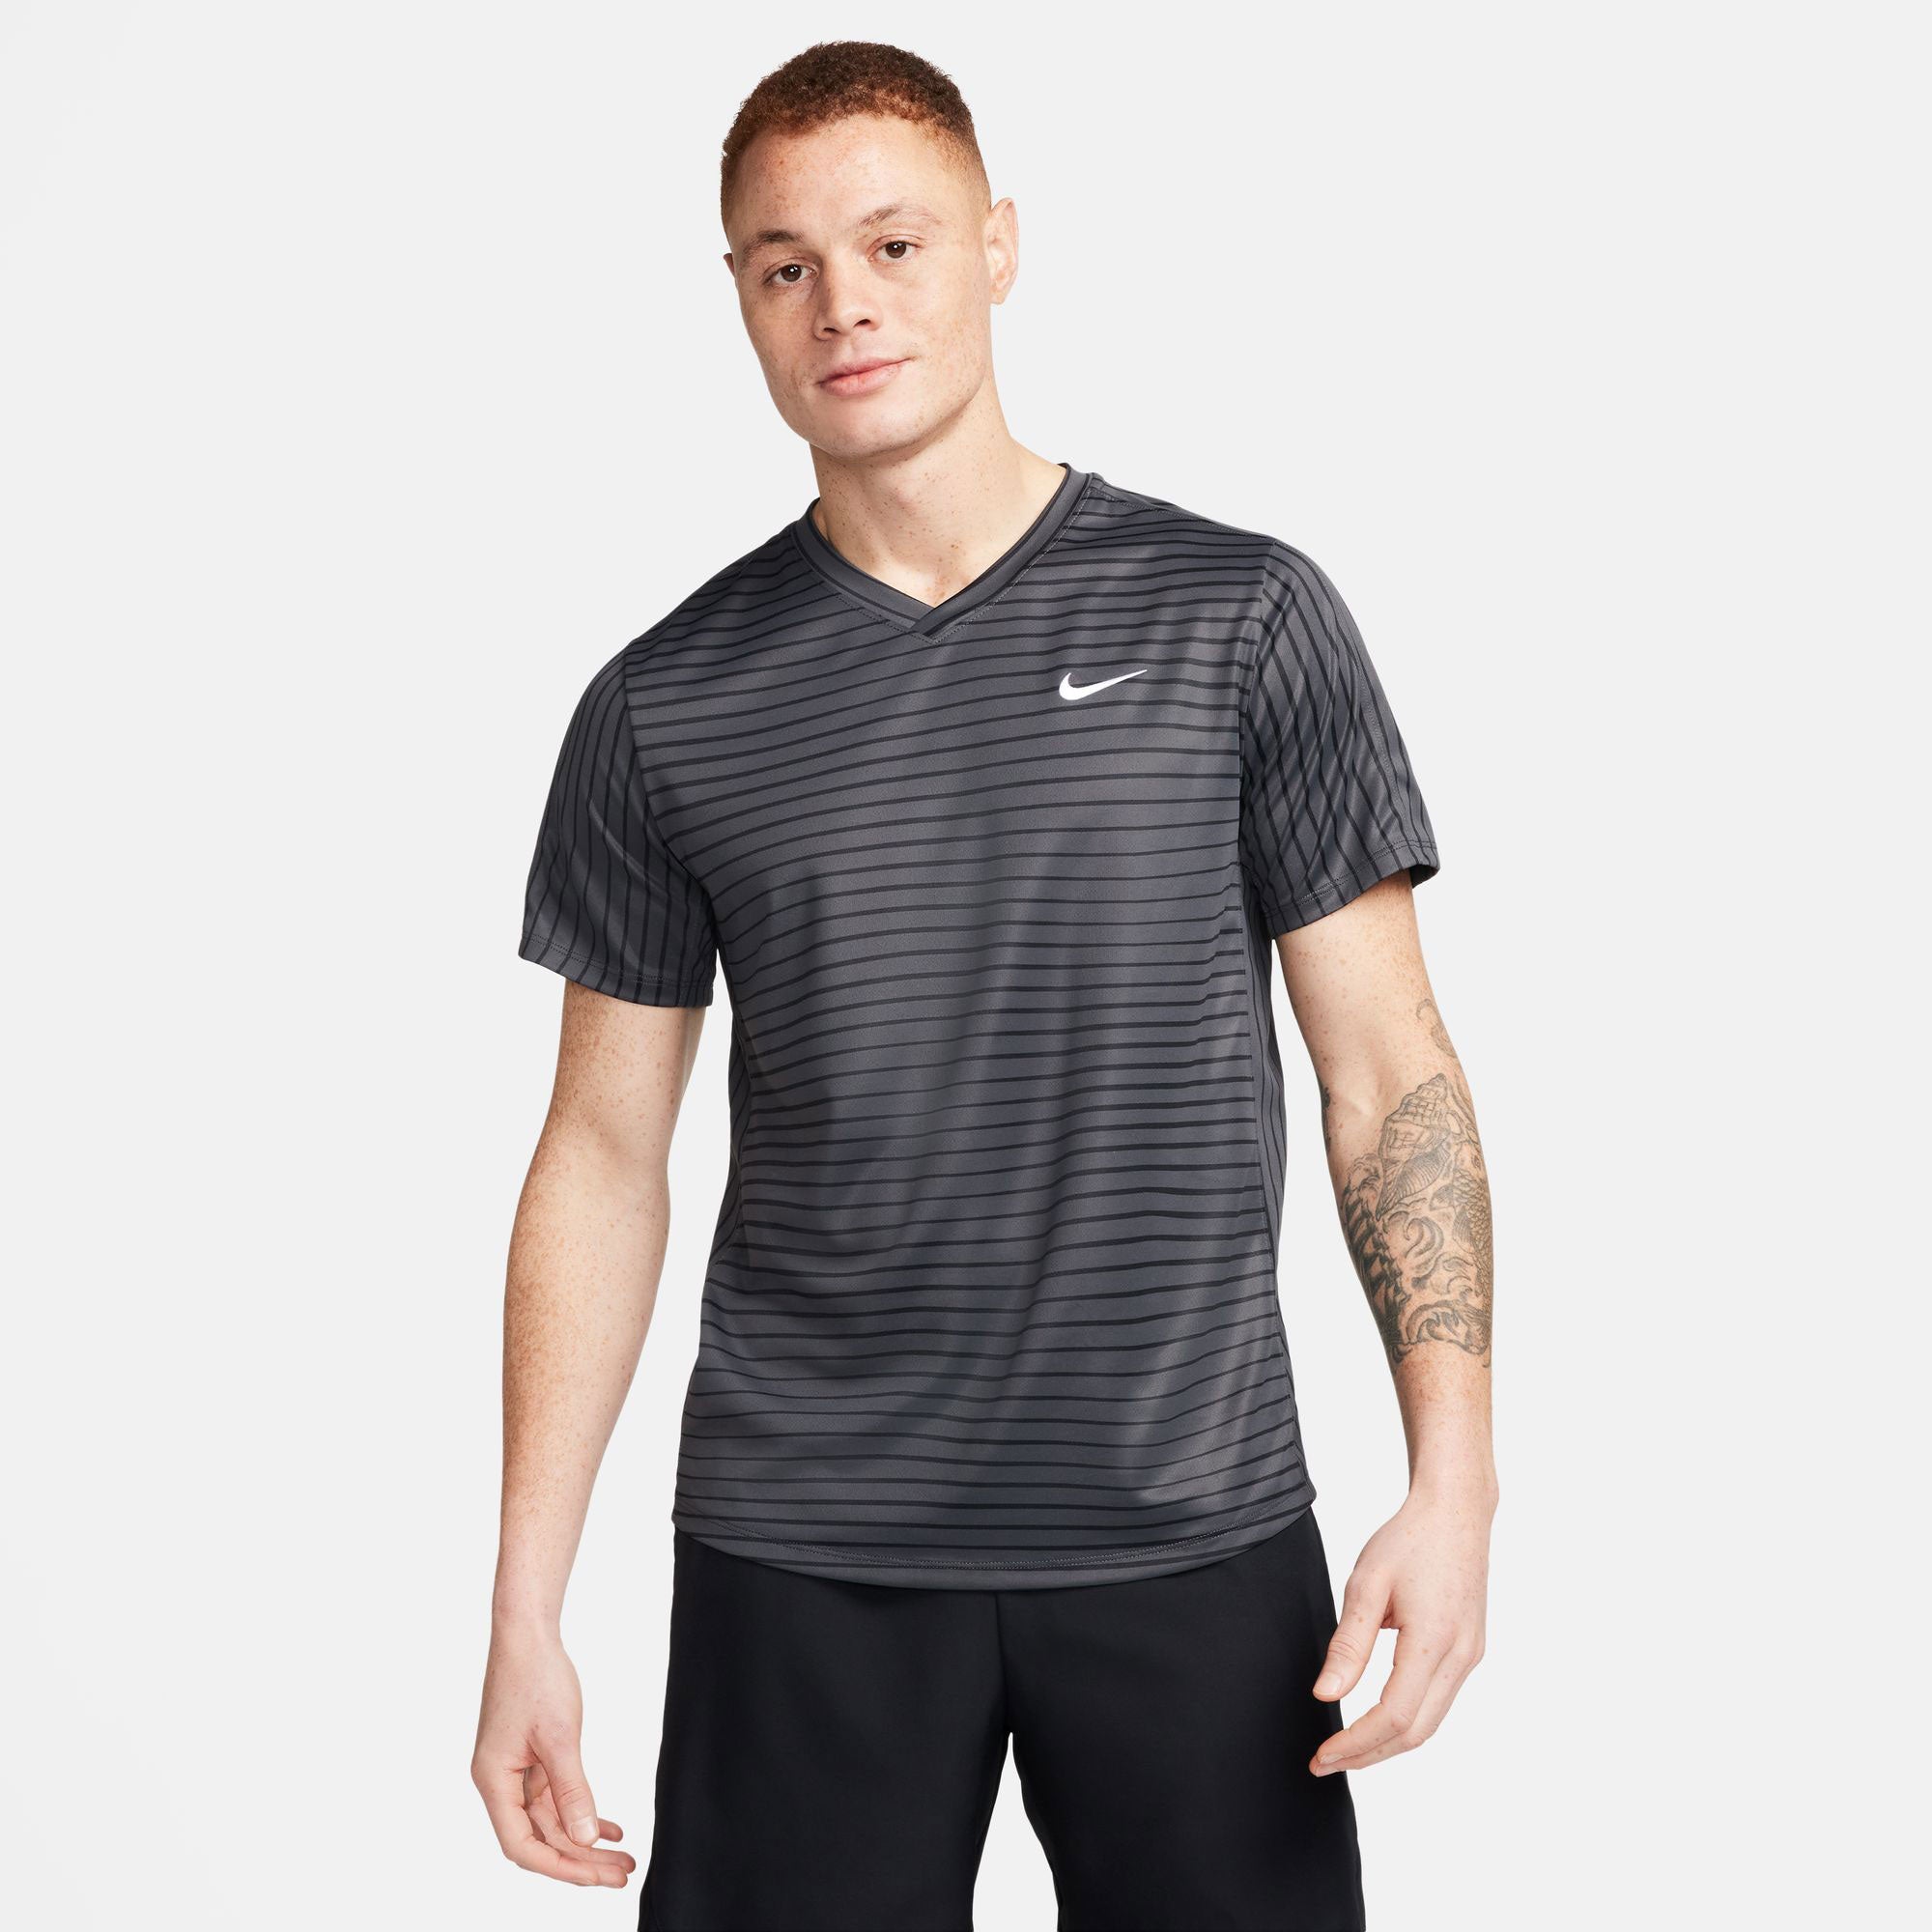 NikeCourt Victory Men's Dri-FIT Printed Tennis Shirt - Grey (1)